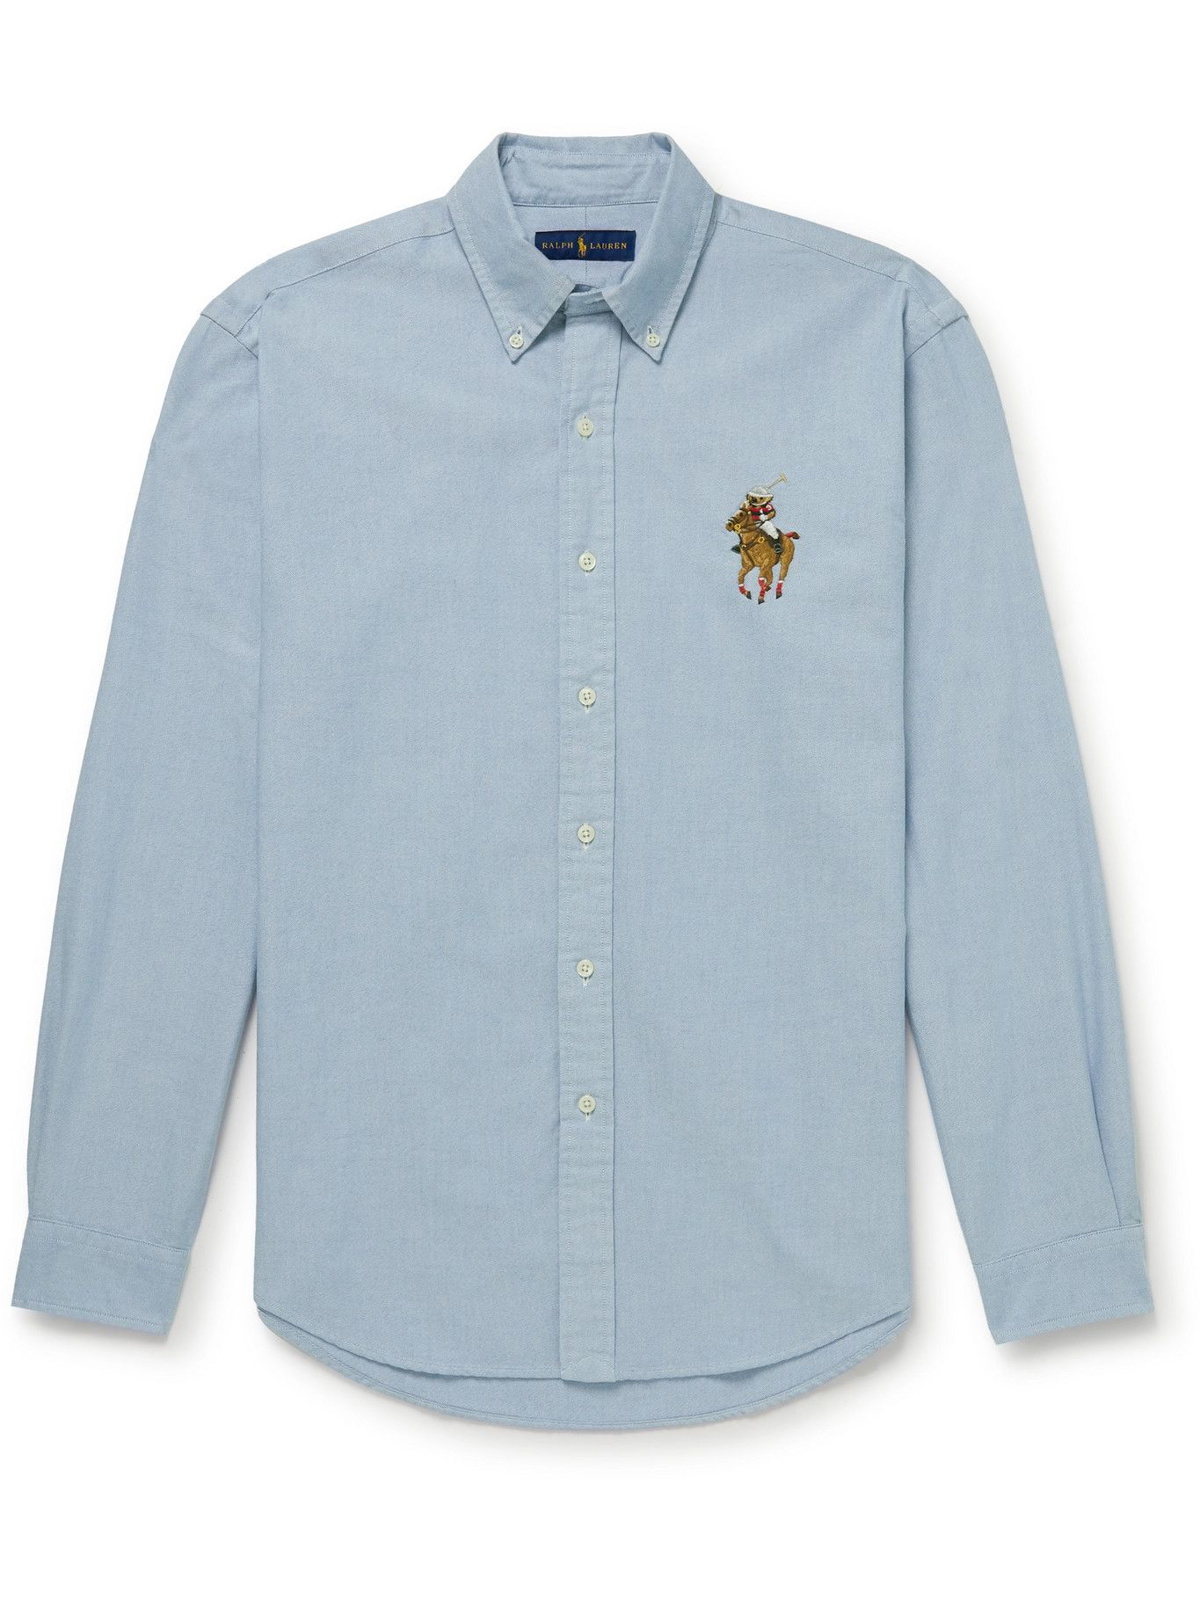 Shirt with buttons on the collar brand POLO RALPH LAUREN —  /en